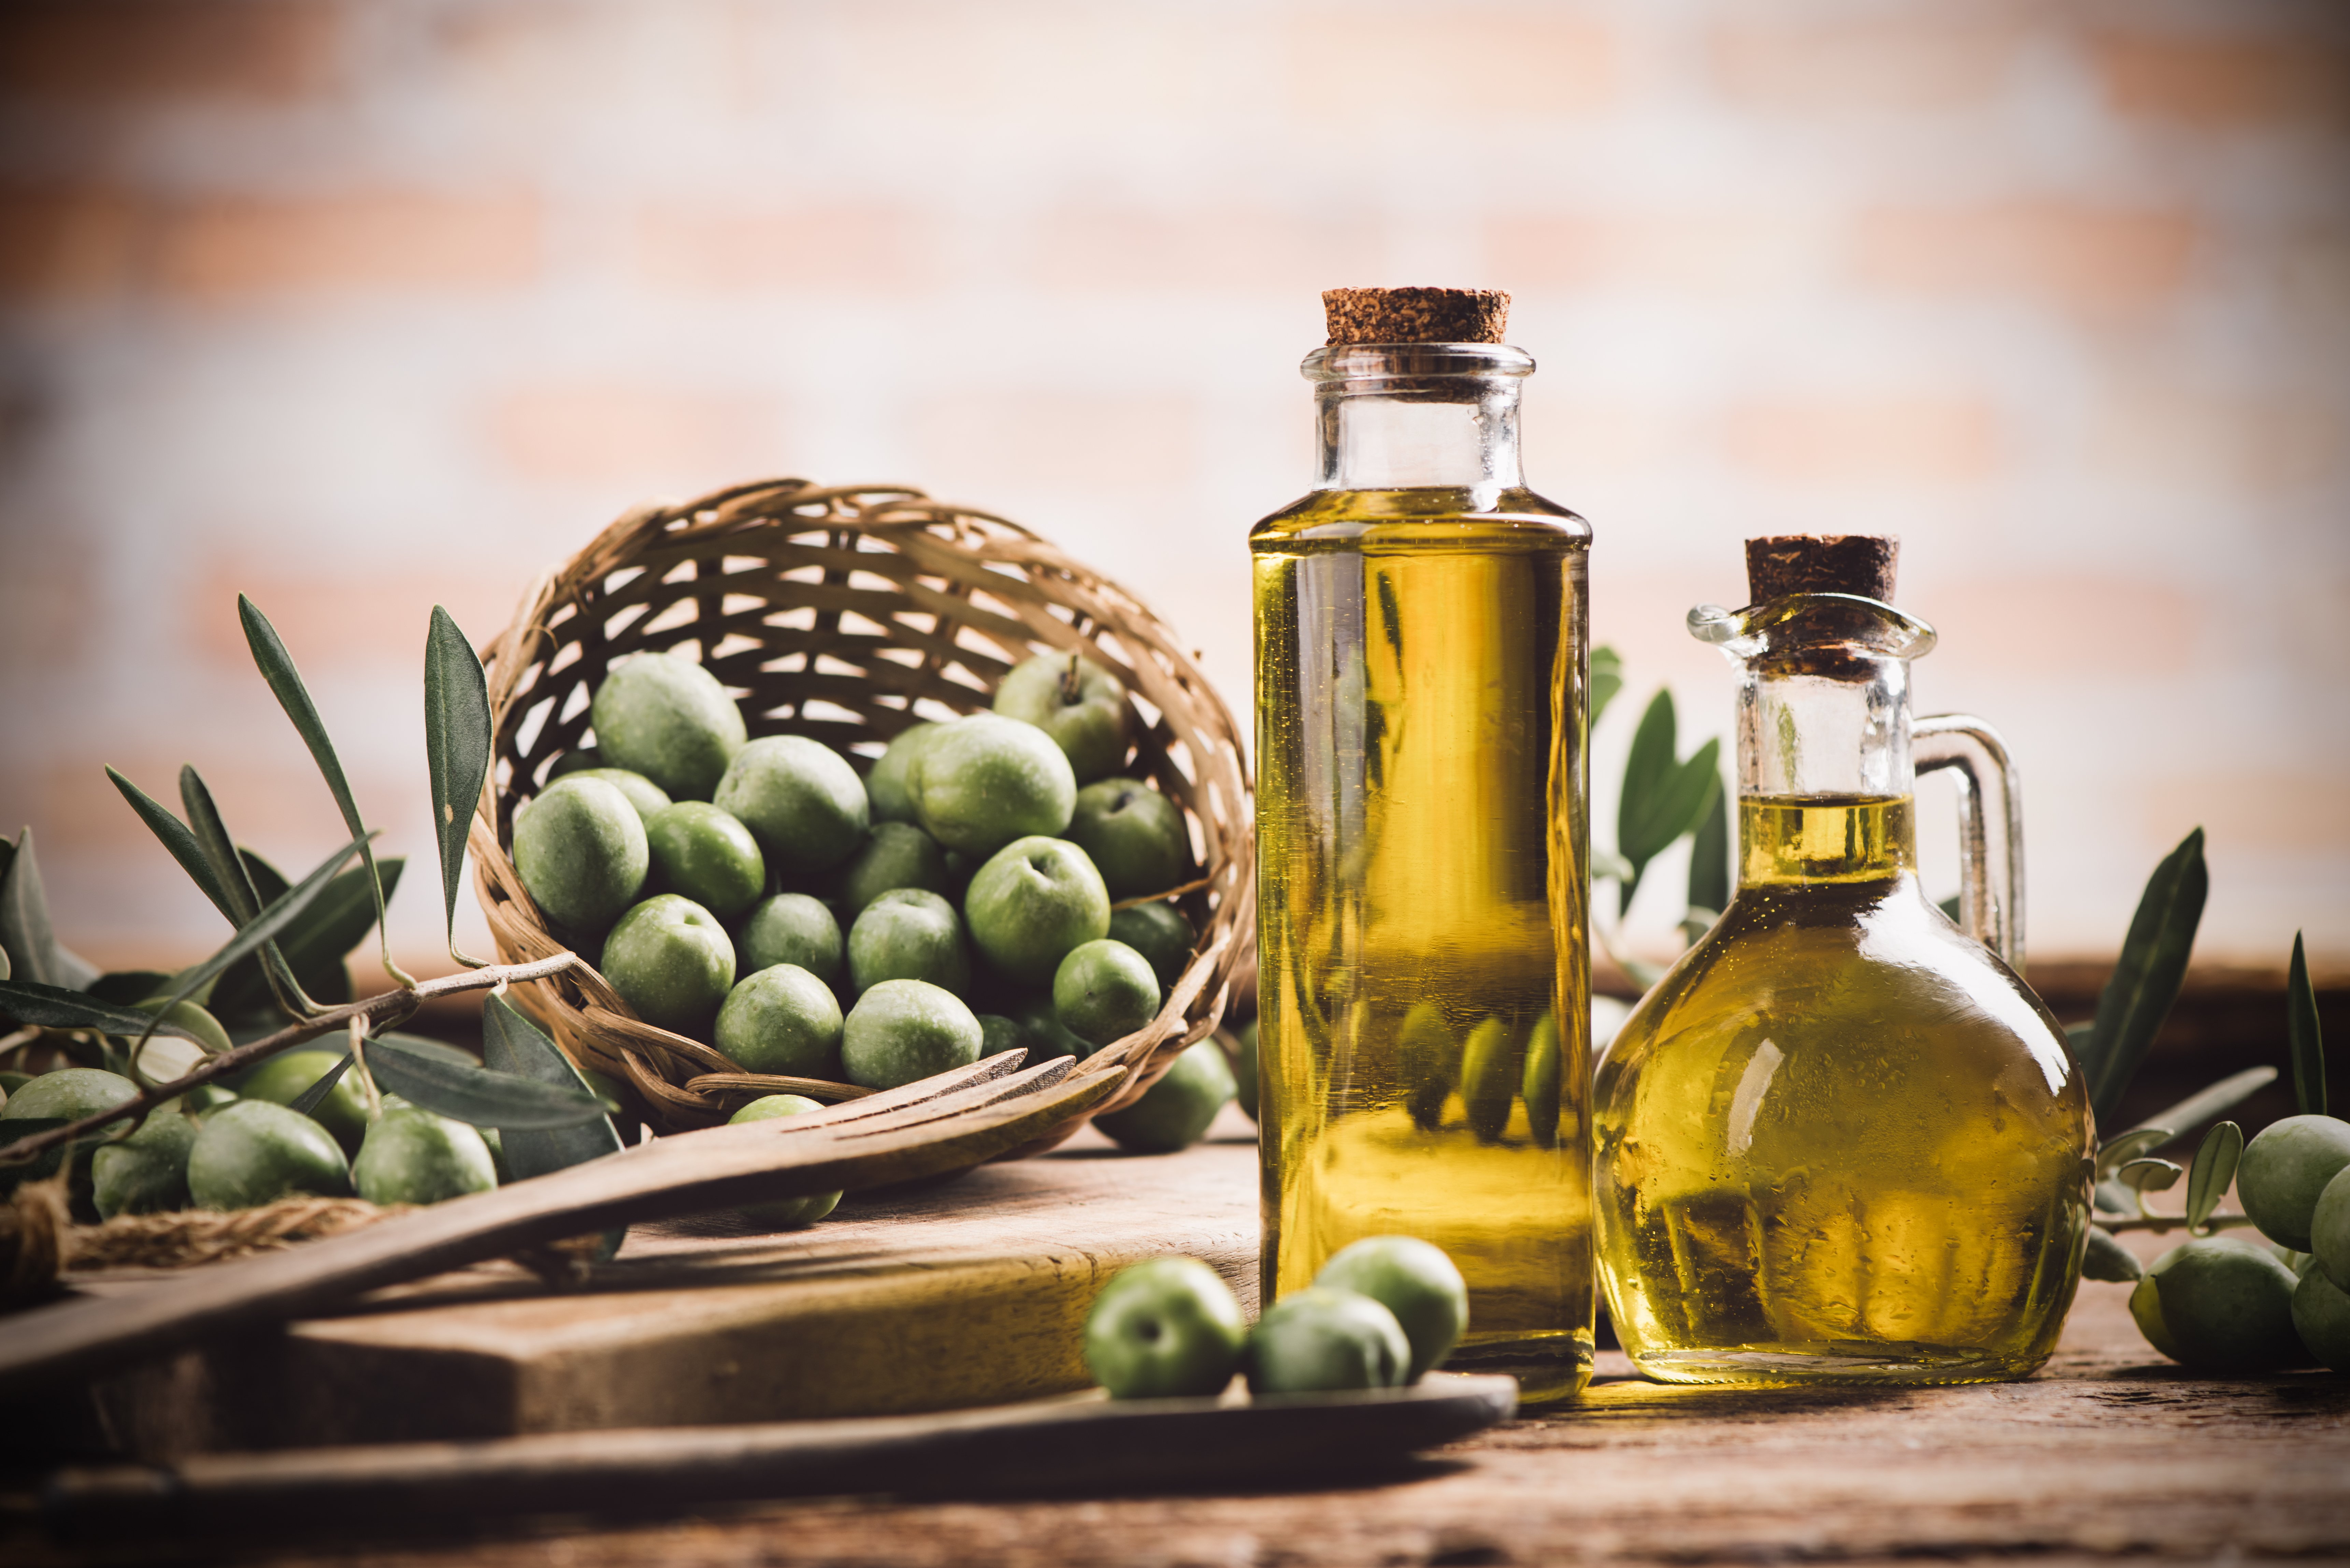 aceite-oliva-aceitunas-frescas-madera-rustica-cerrar